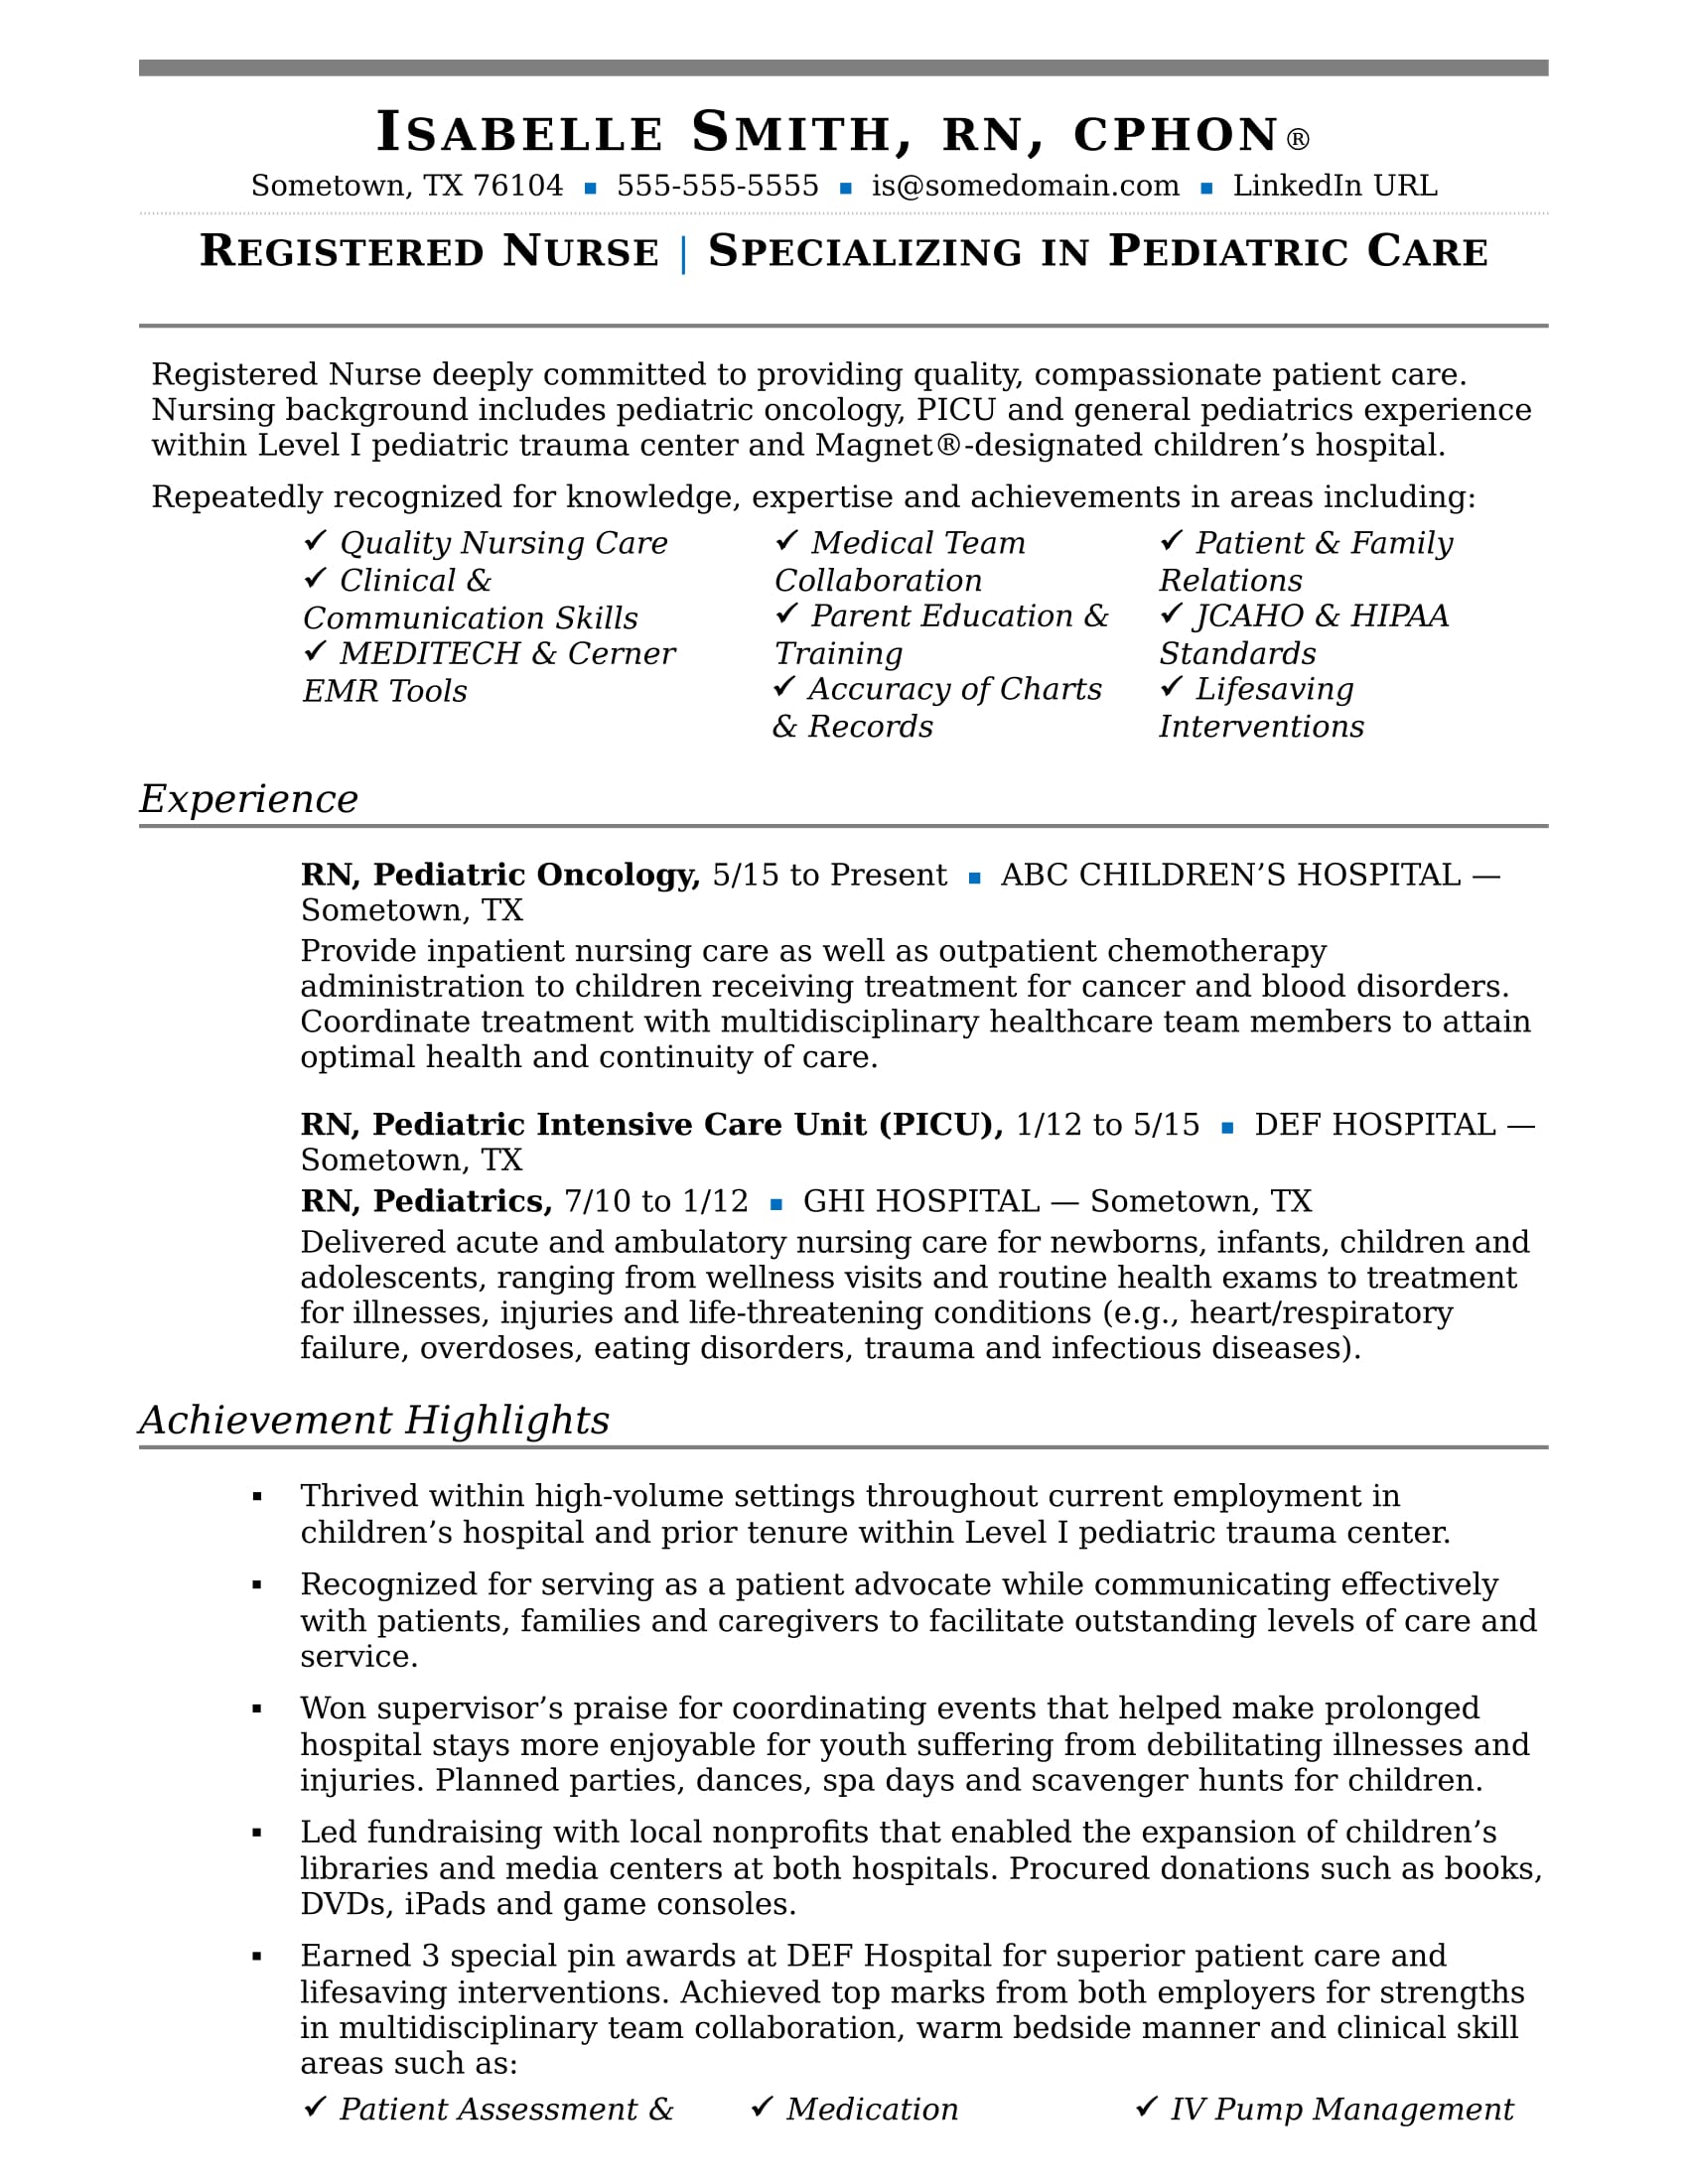 Resume example for nursing job